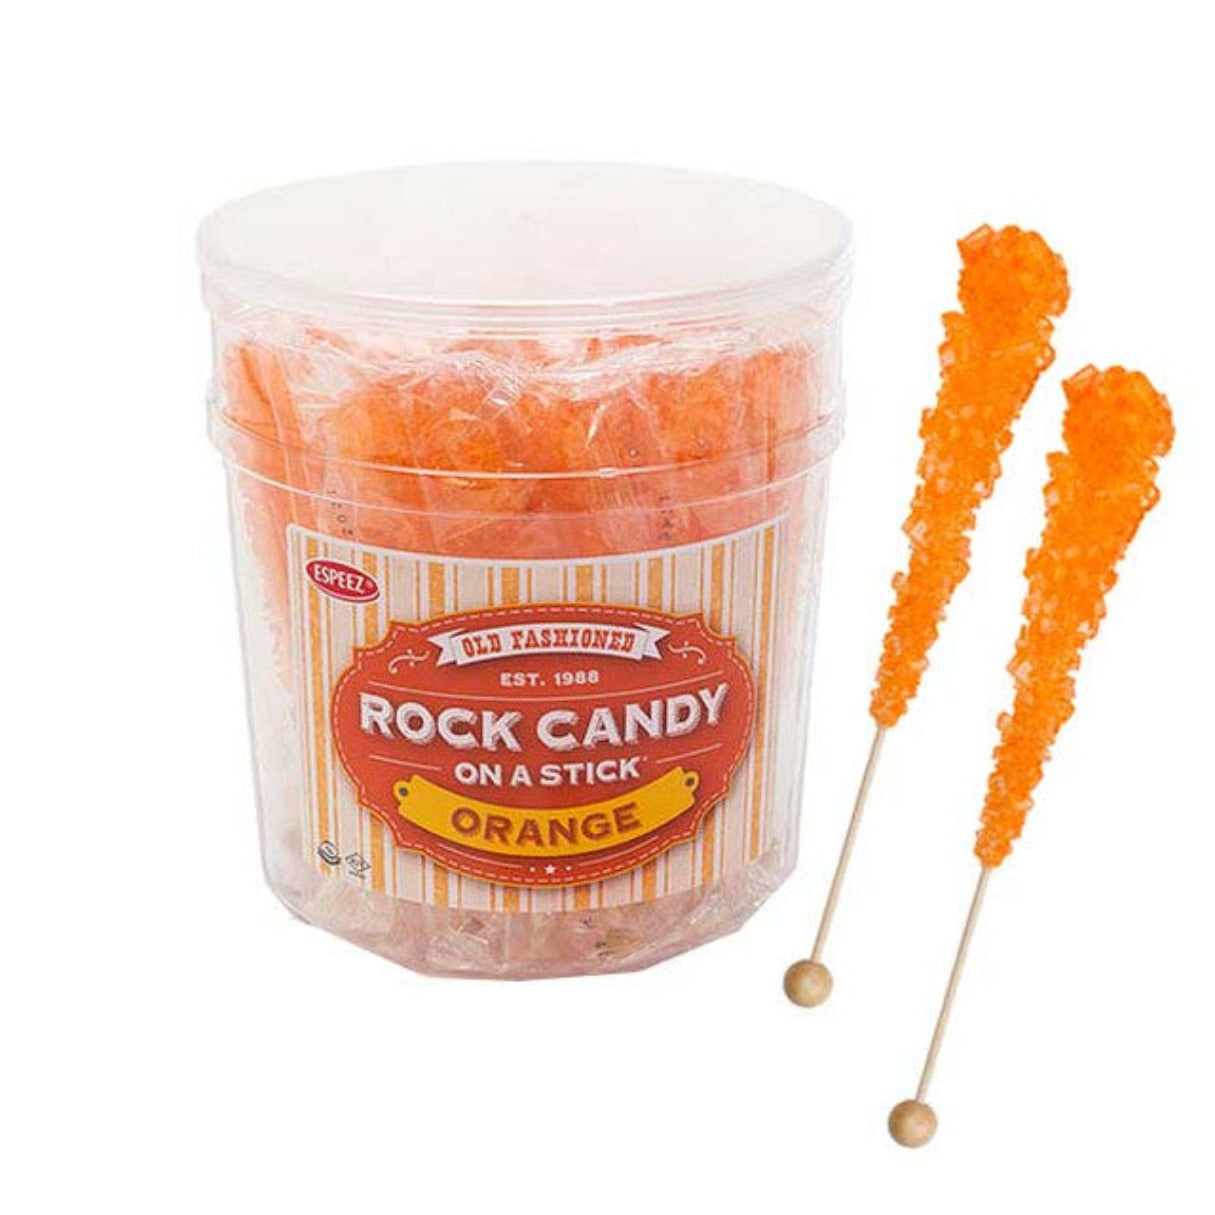 Espeez Rock Candy Sticks Orange Jar 0.8oz - 36ct